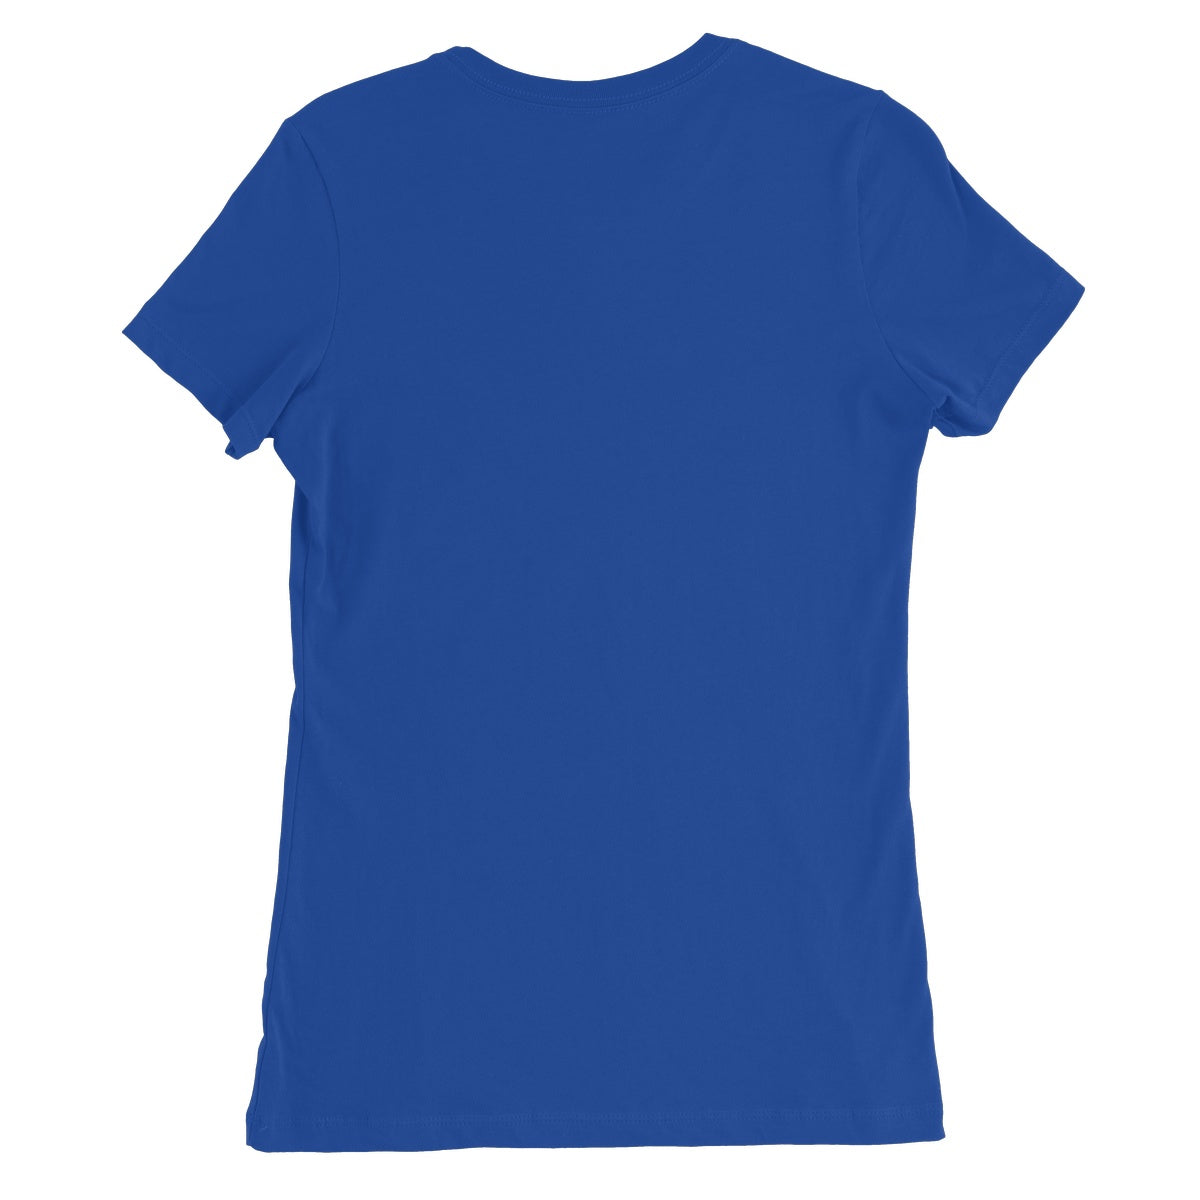 Bound For Glory 2020 - Trey Women's Favourite T-Shirt